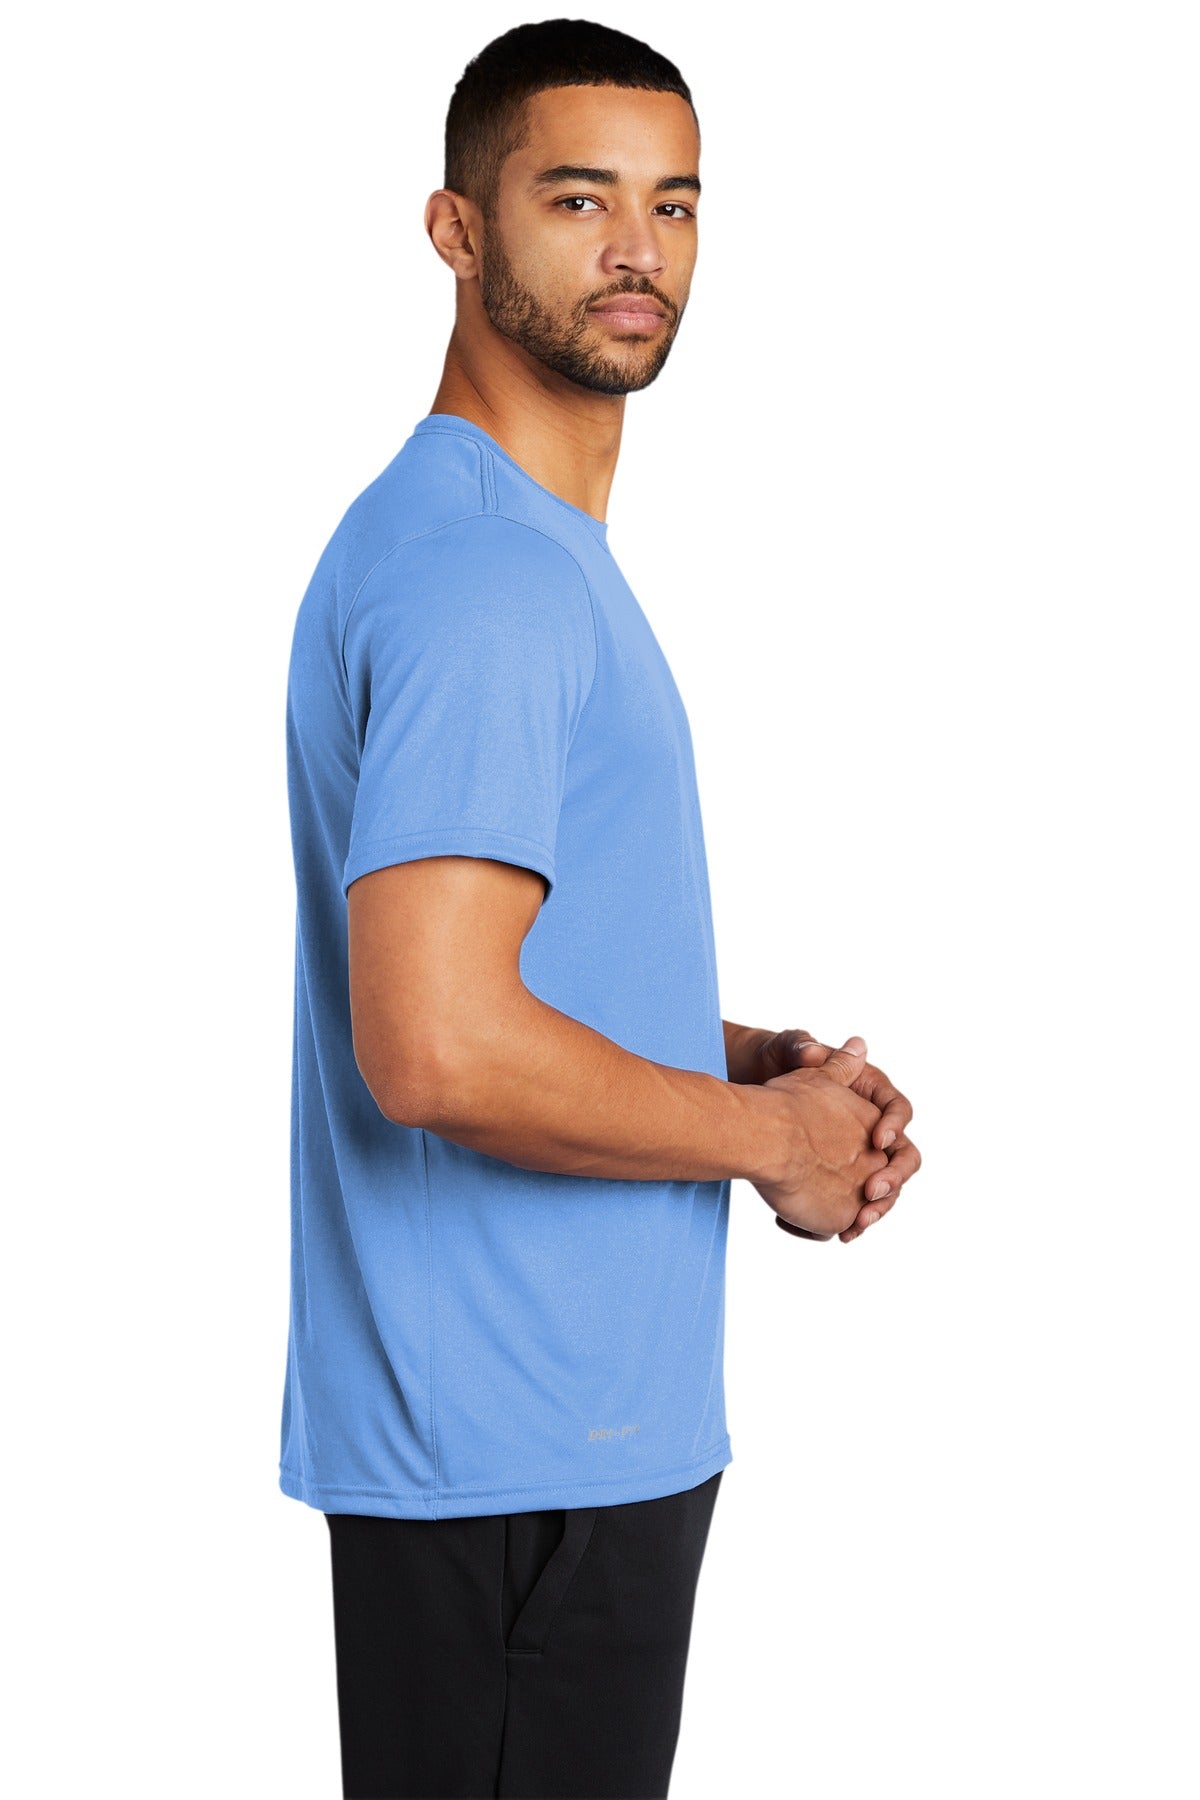 Nike Legend Tee 727982 - BT Imprintables Shirts